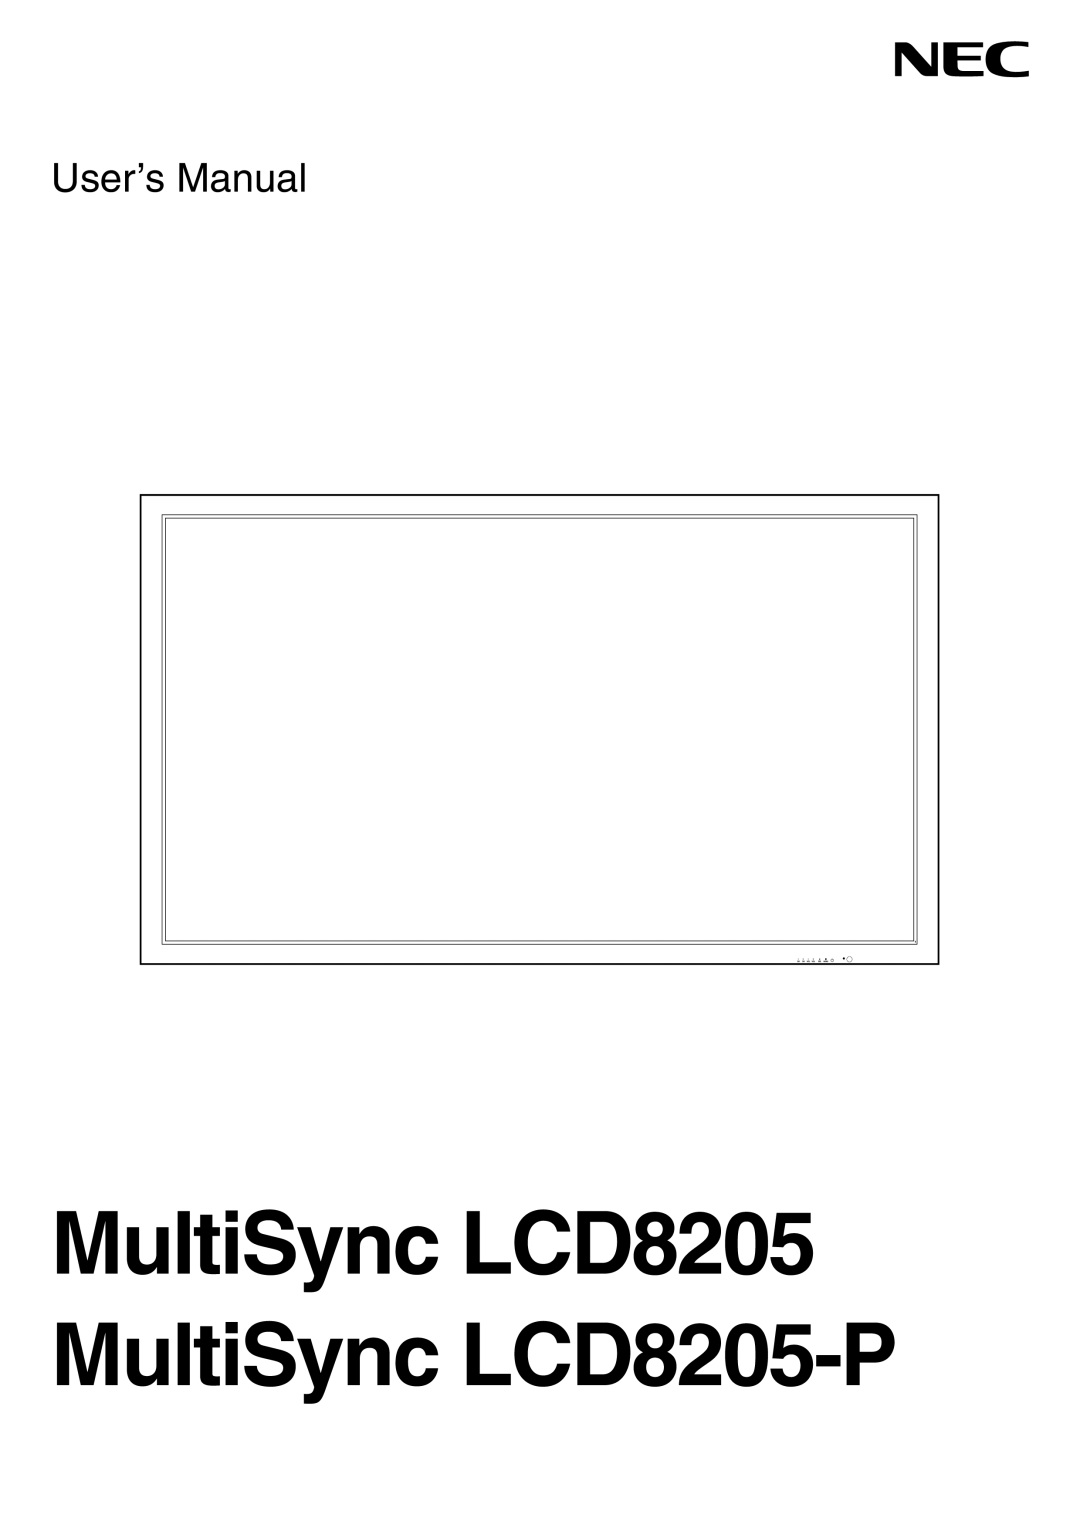 NEC user manual MultiSync LCD8205 MultiSync LCD8205-P, User’s Manual 